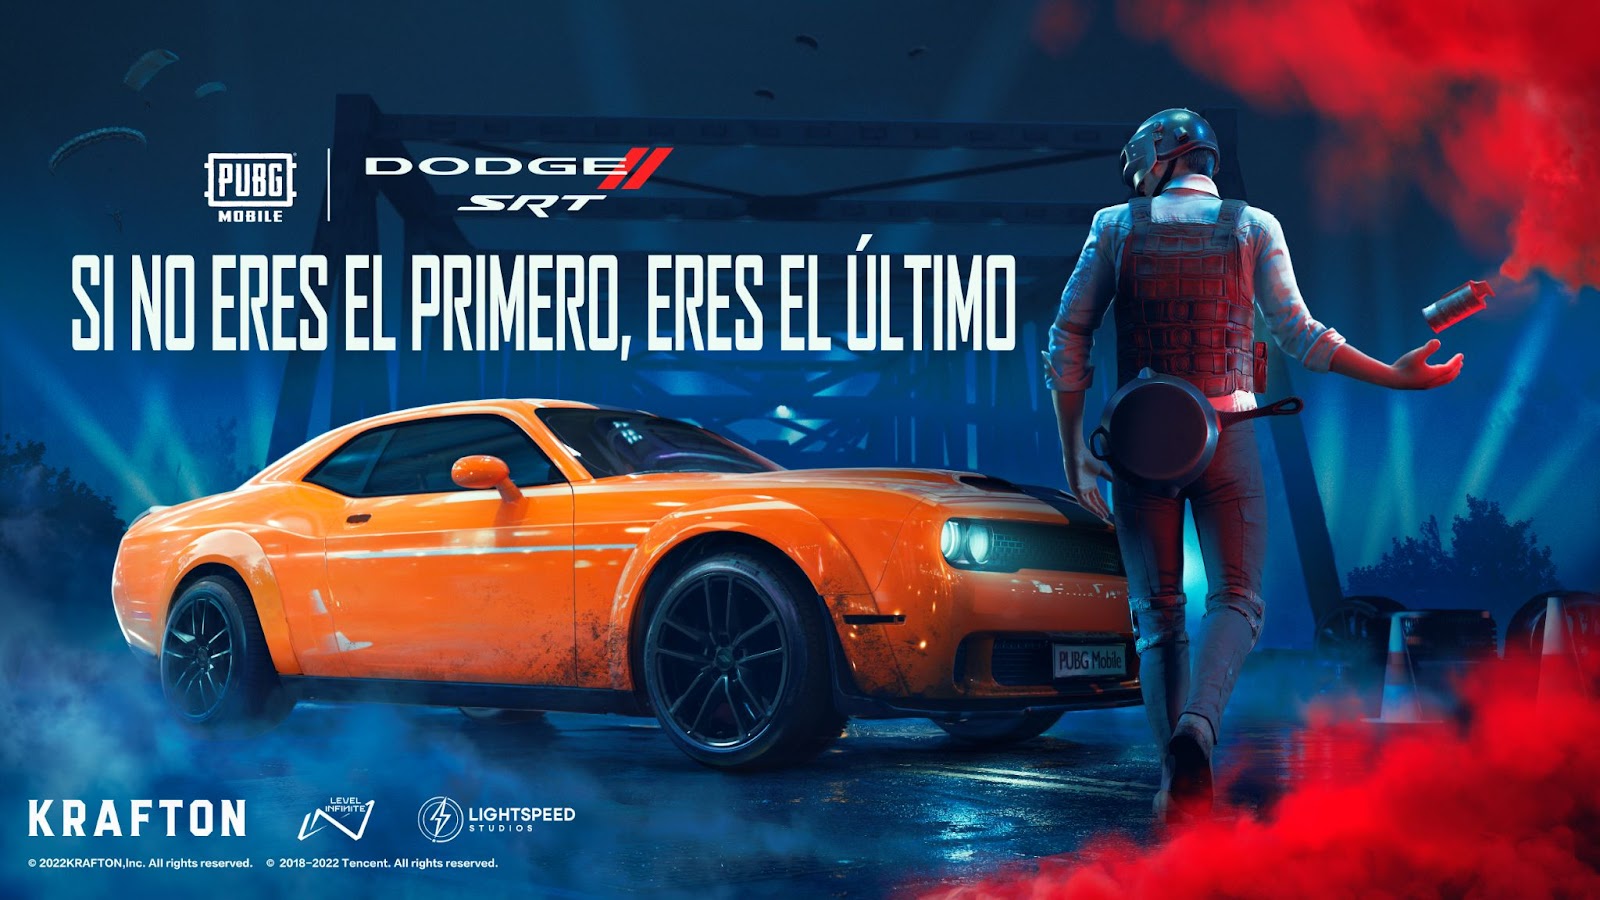 PUBG MOBILE anuncia colaboración con Dodge